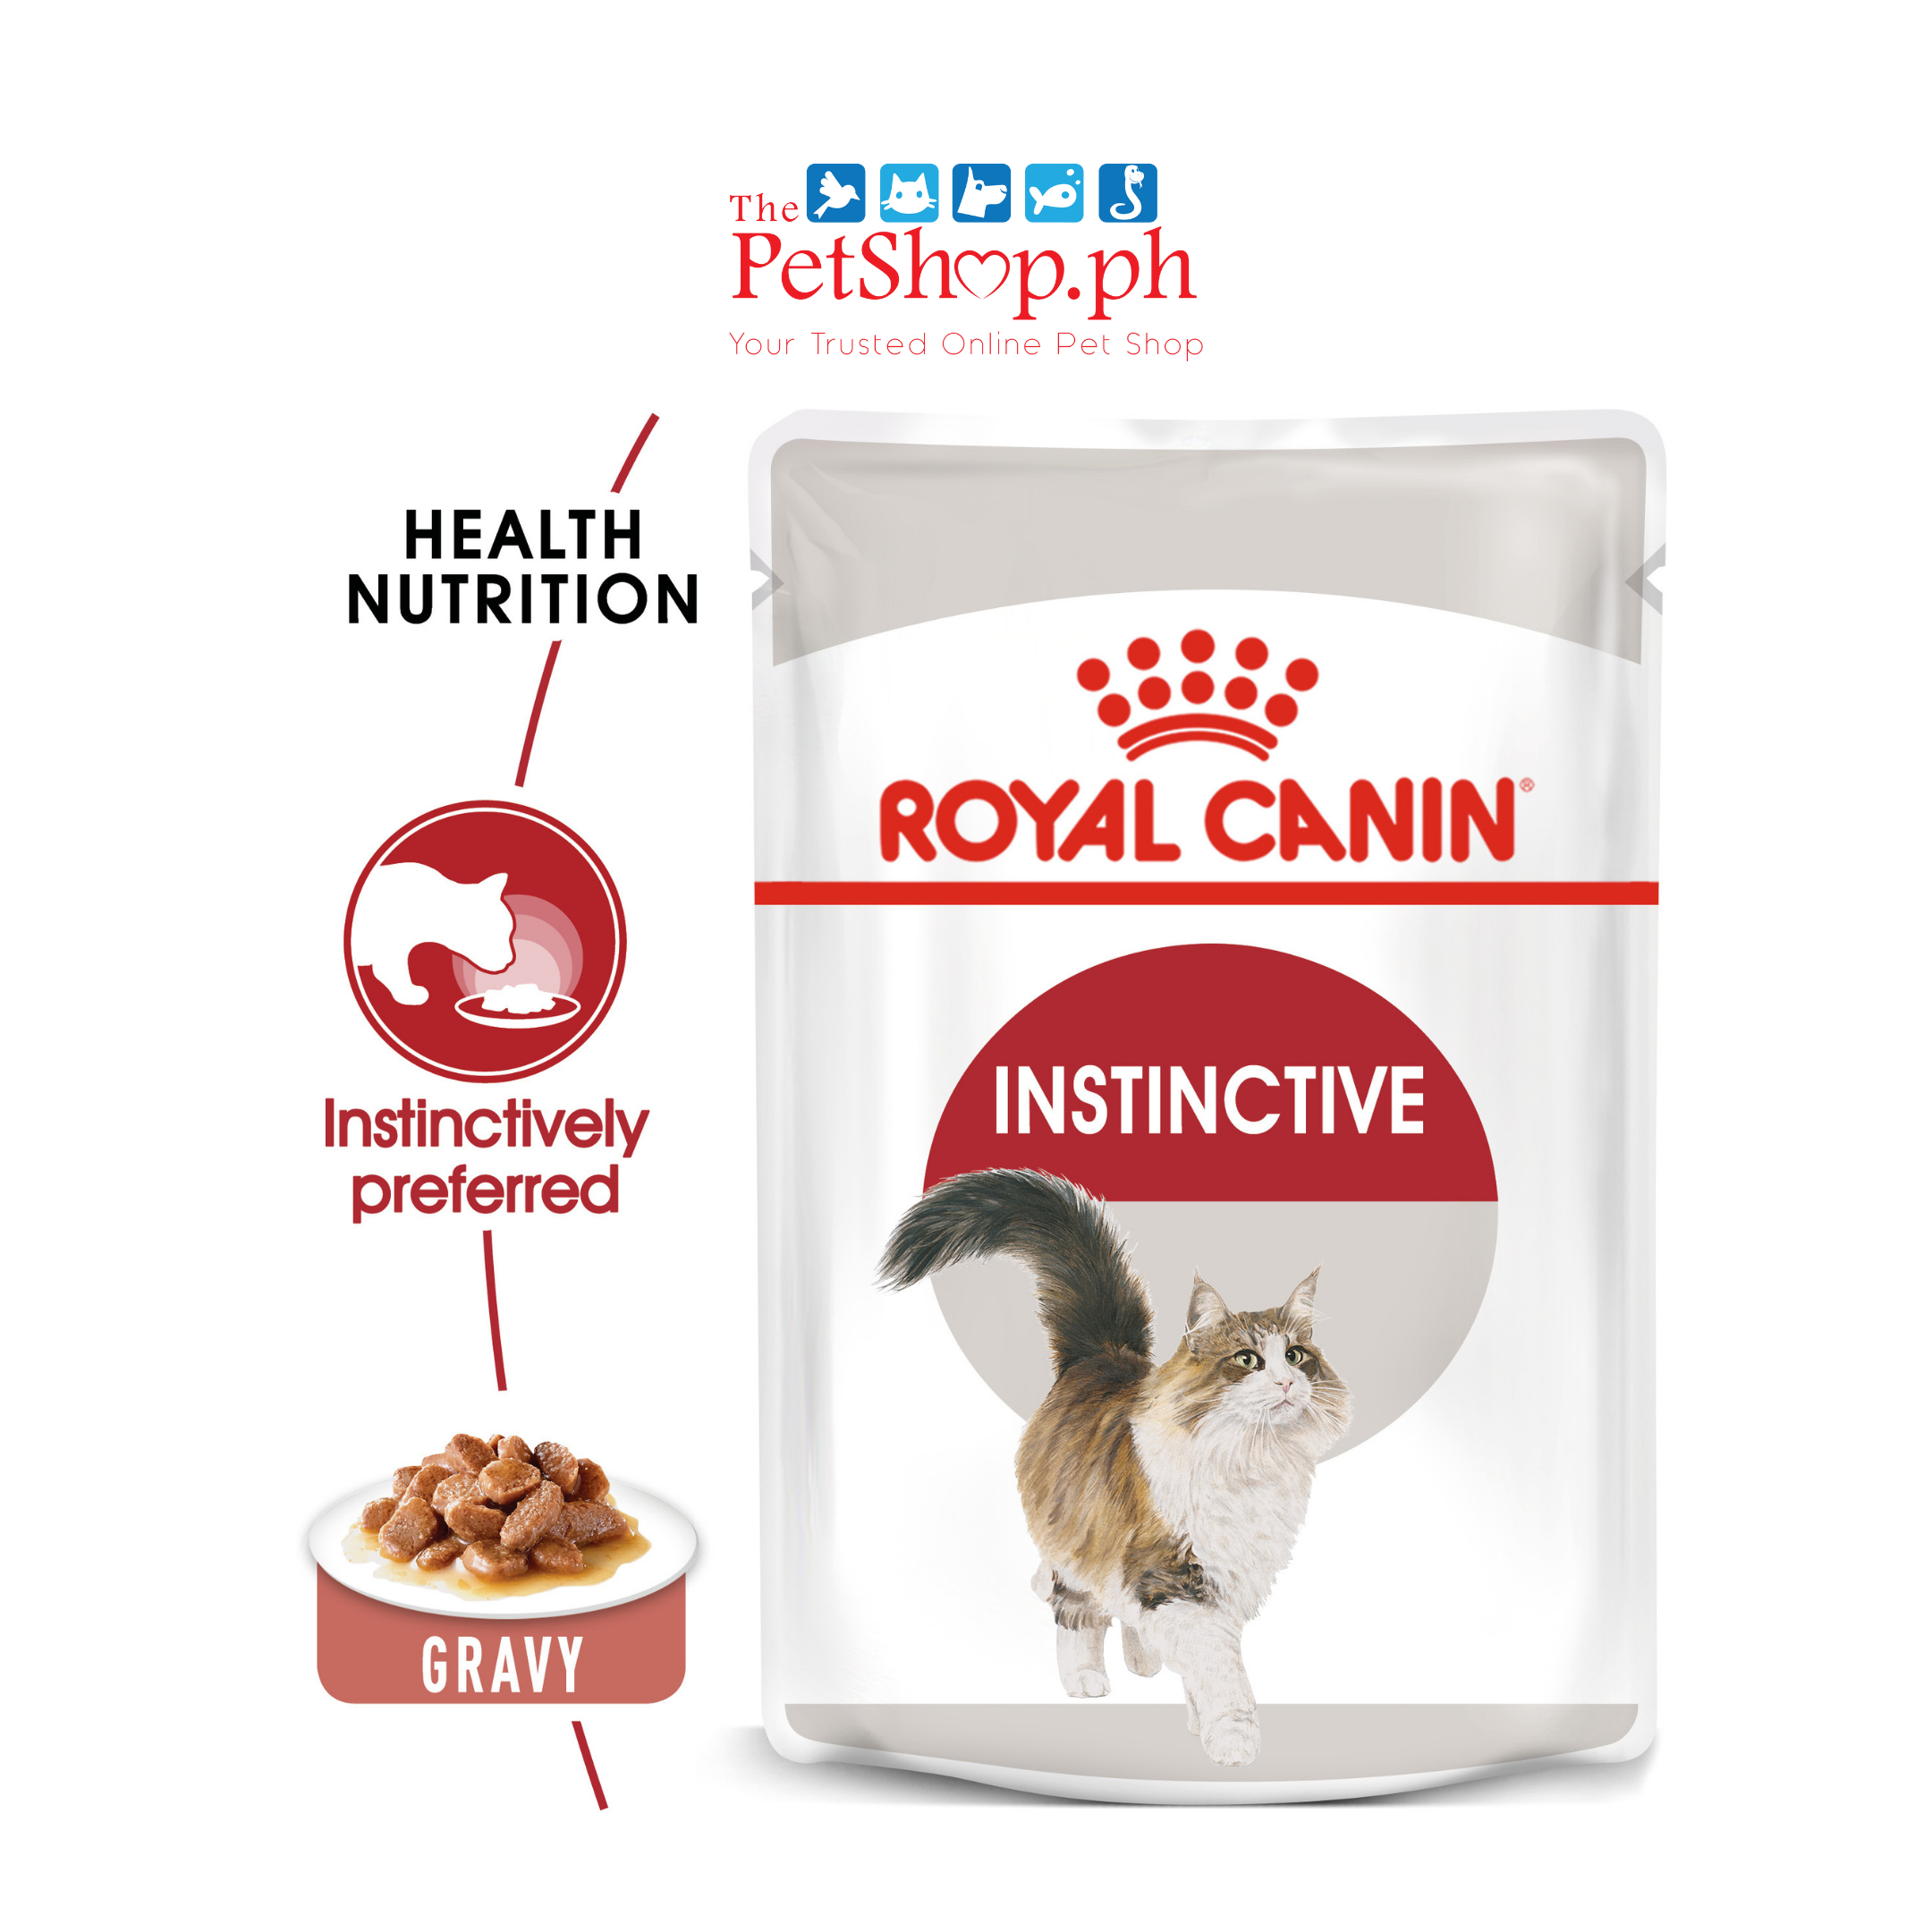 Royal Canin Instinctive Adult Gravy Wet Cat Food 85g Pouch - Feline Health Nutrition